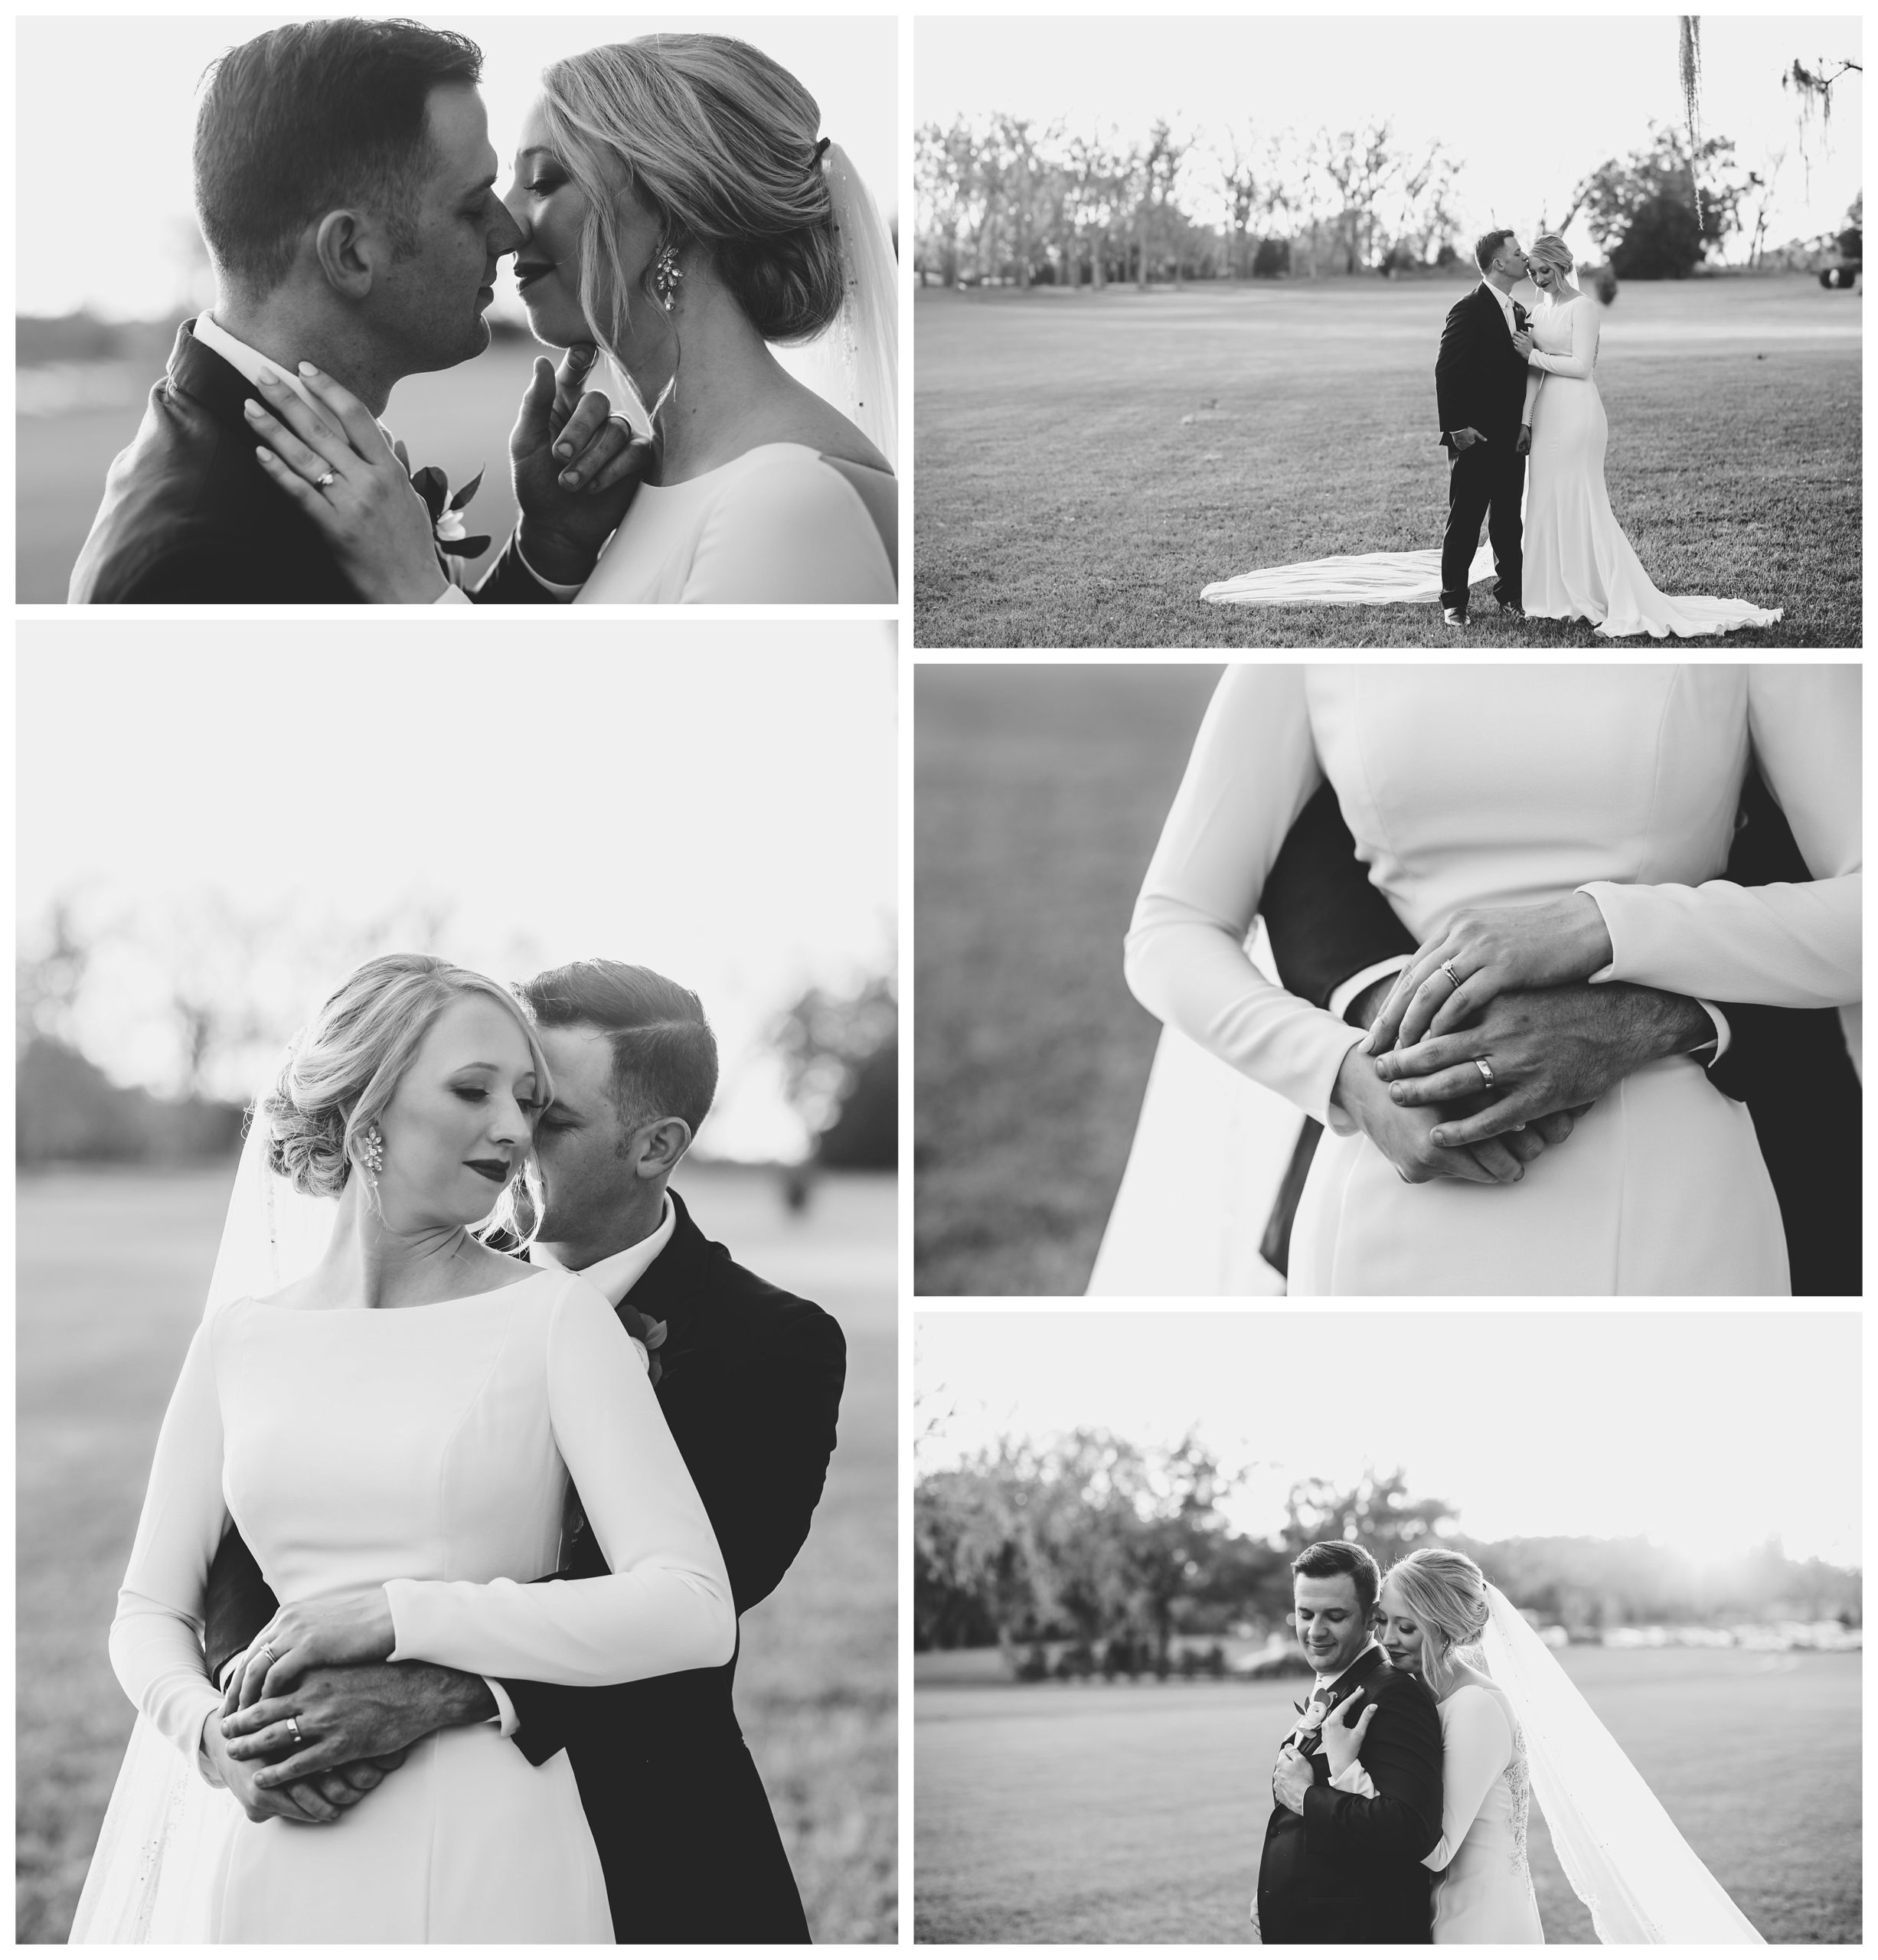 Clark plantation wedding photographer takes black and white intimate photos - Shelly Williams Photography